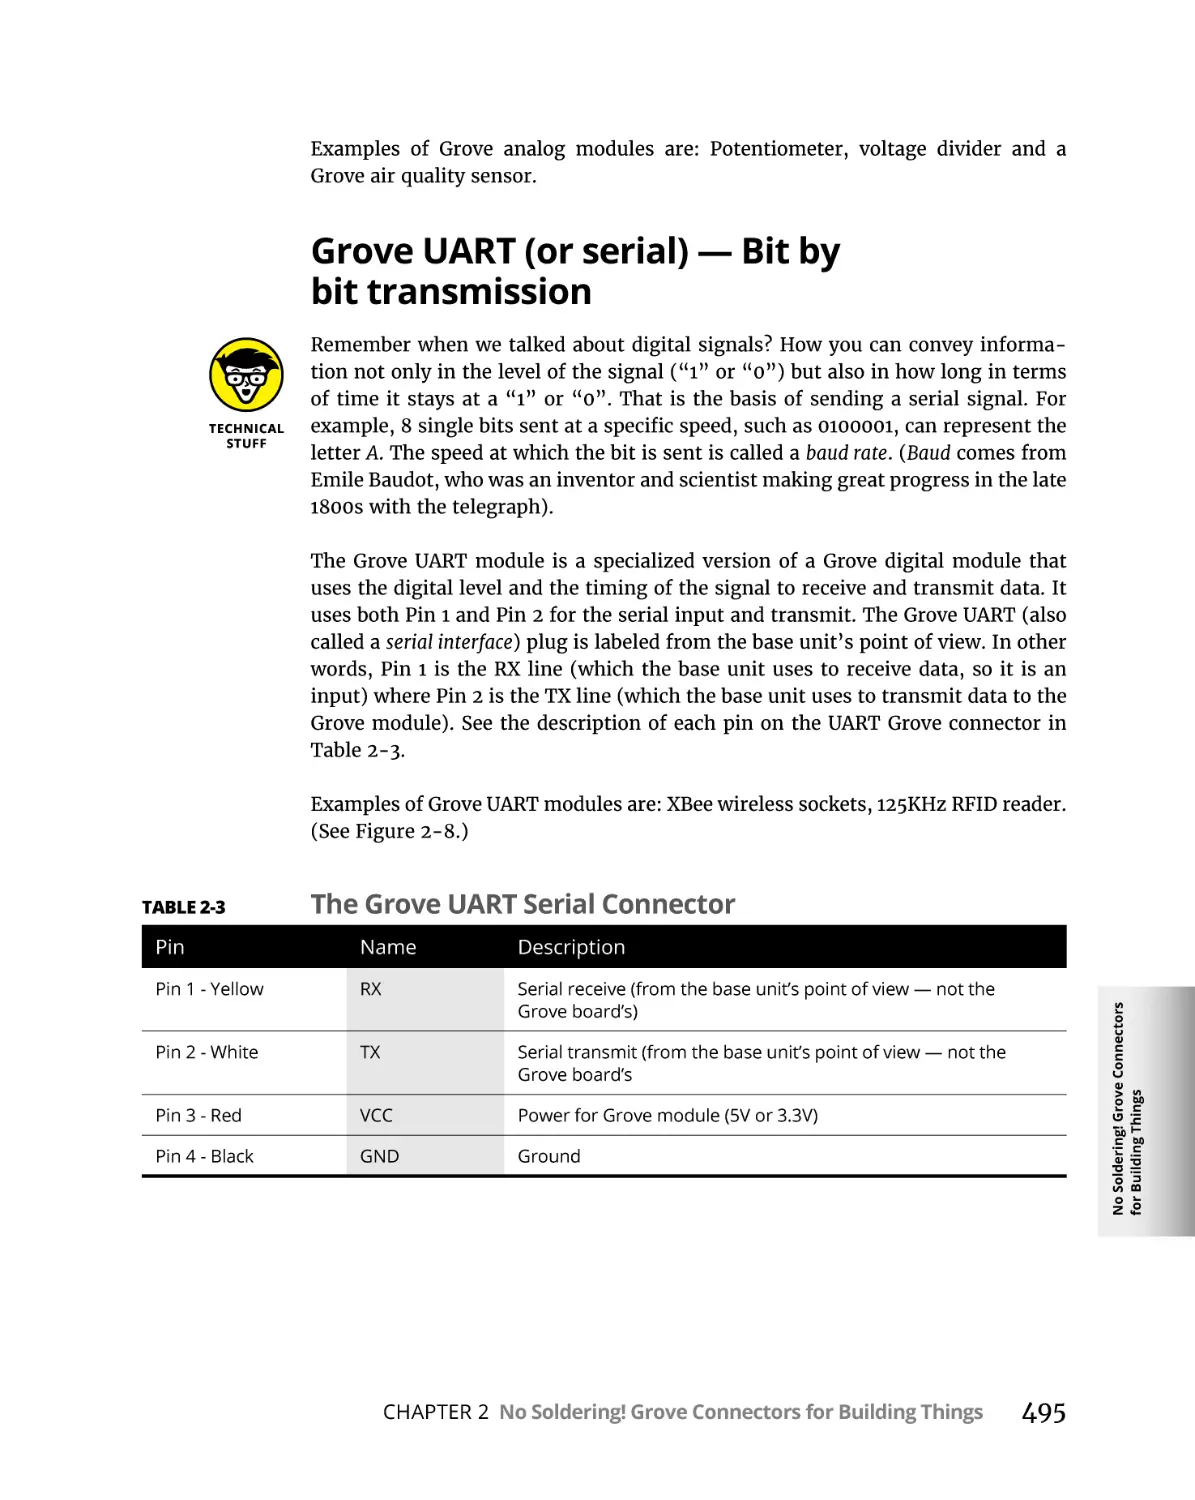 Grove UART (or serial) — Bit by bit transmission